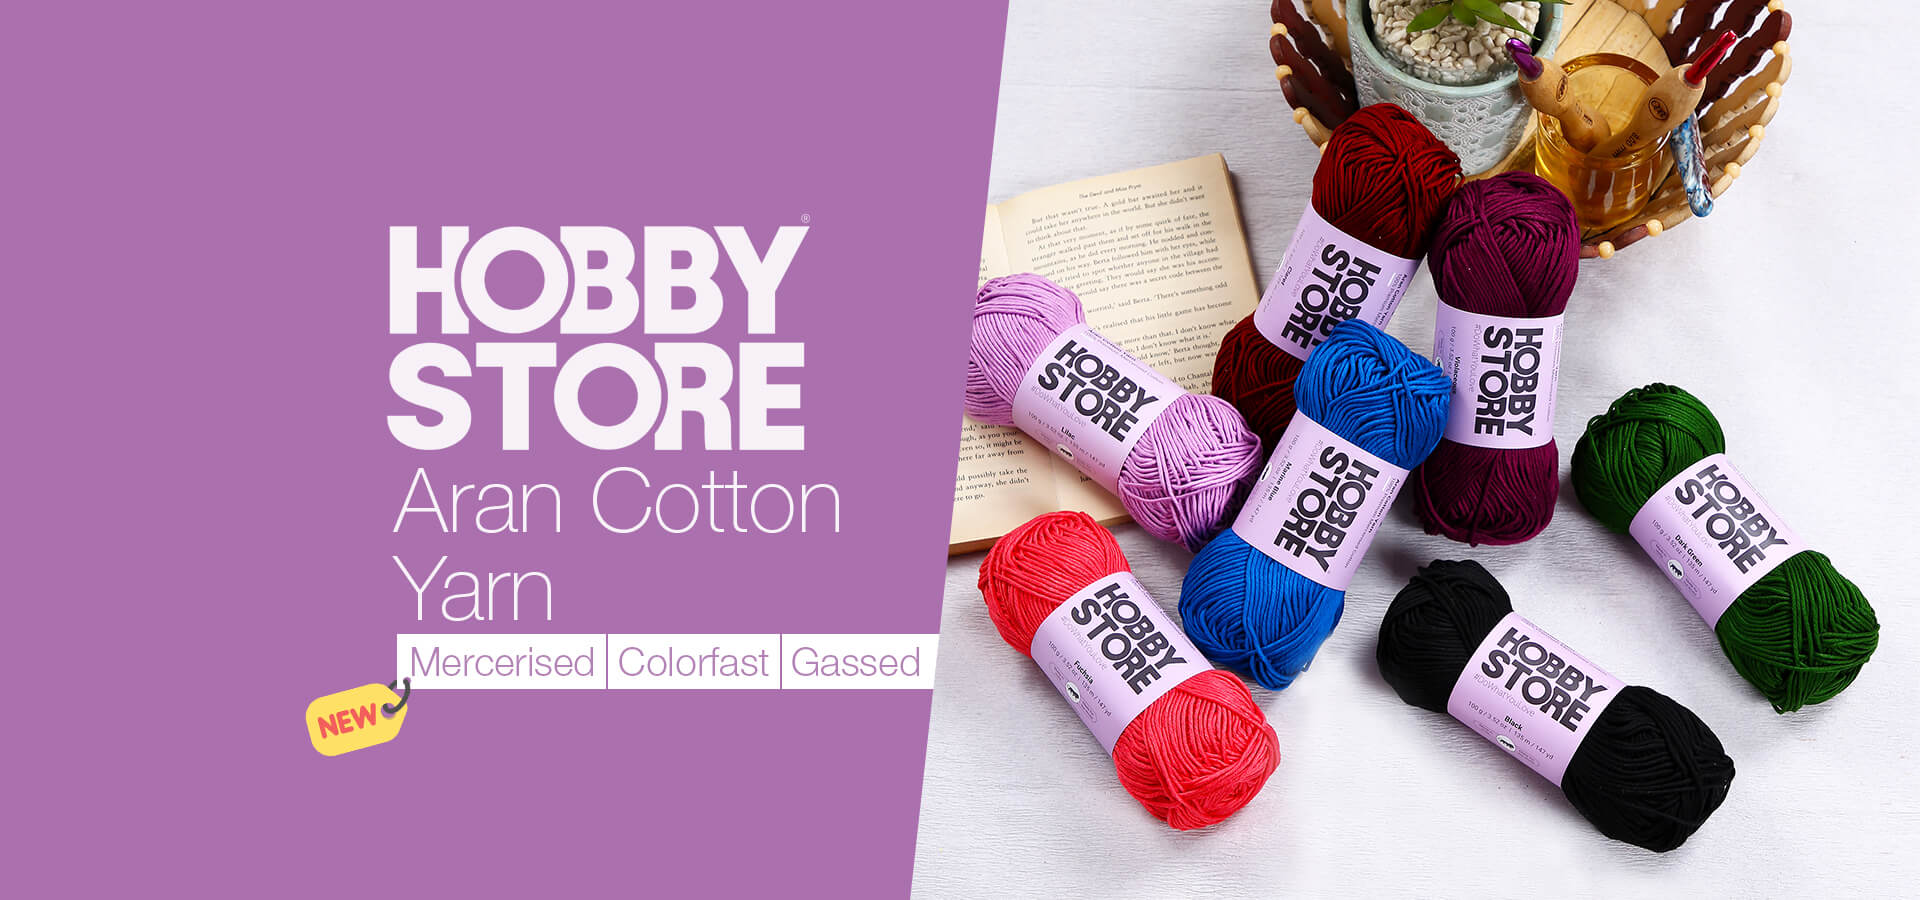 Aran Mercerised Cotton Yarn by Hobby Store